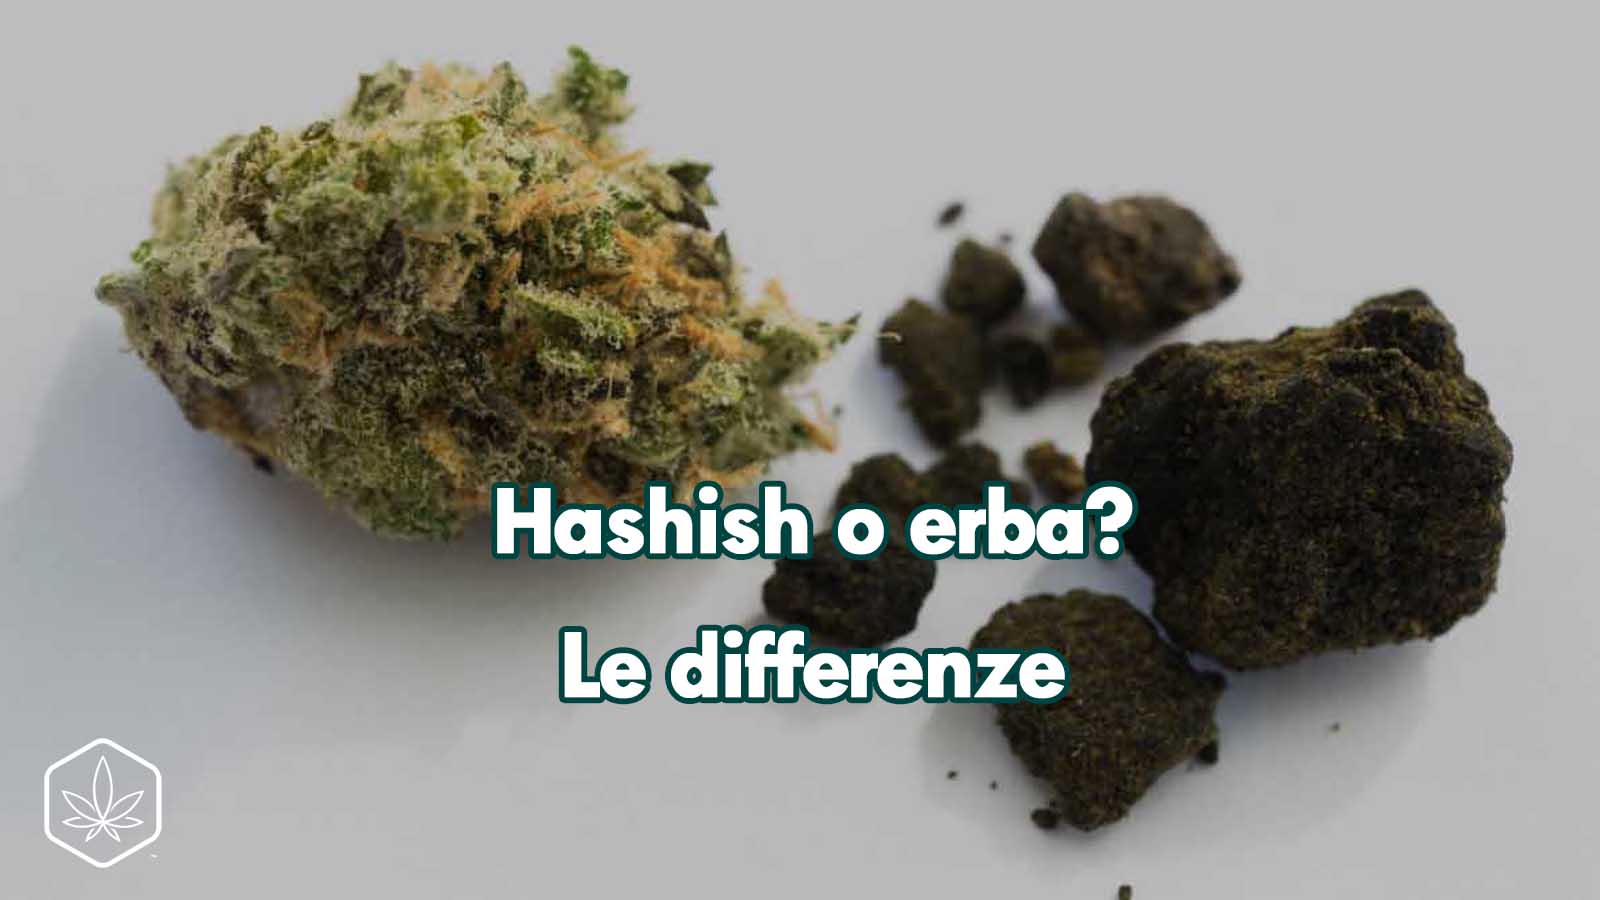 Hashish o erba CBD? Le differenze - Hemp Embassy - Cannabis Light & Hash  CBD Online Shop